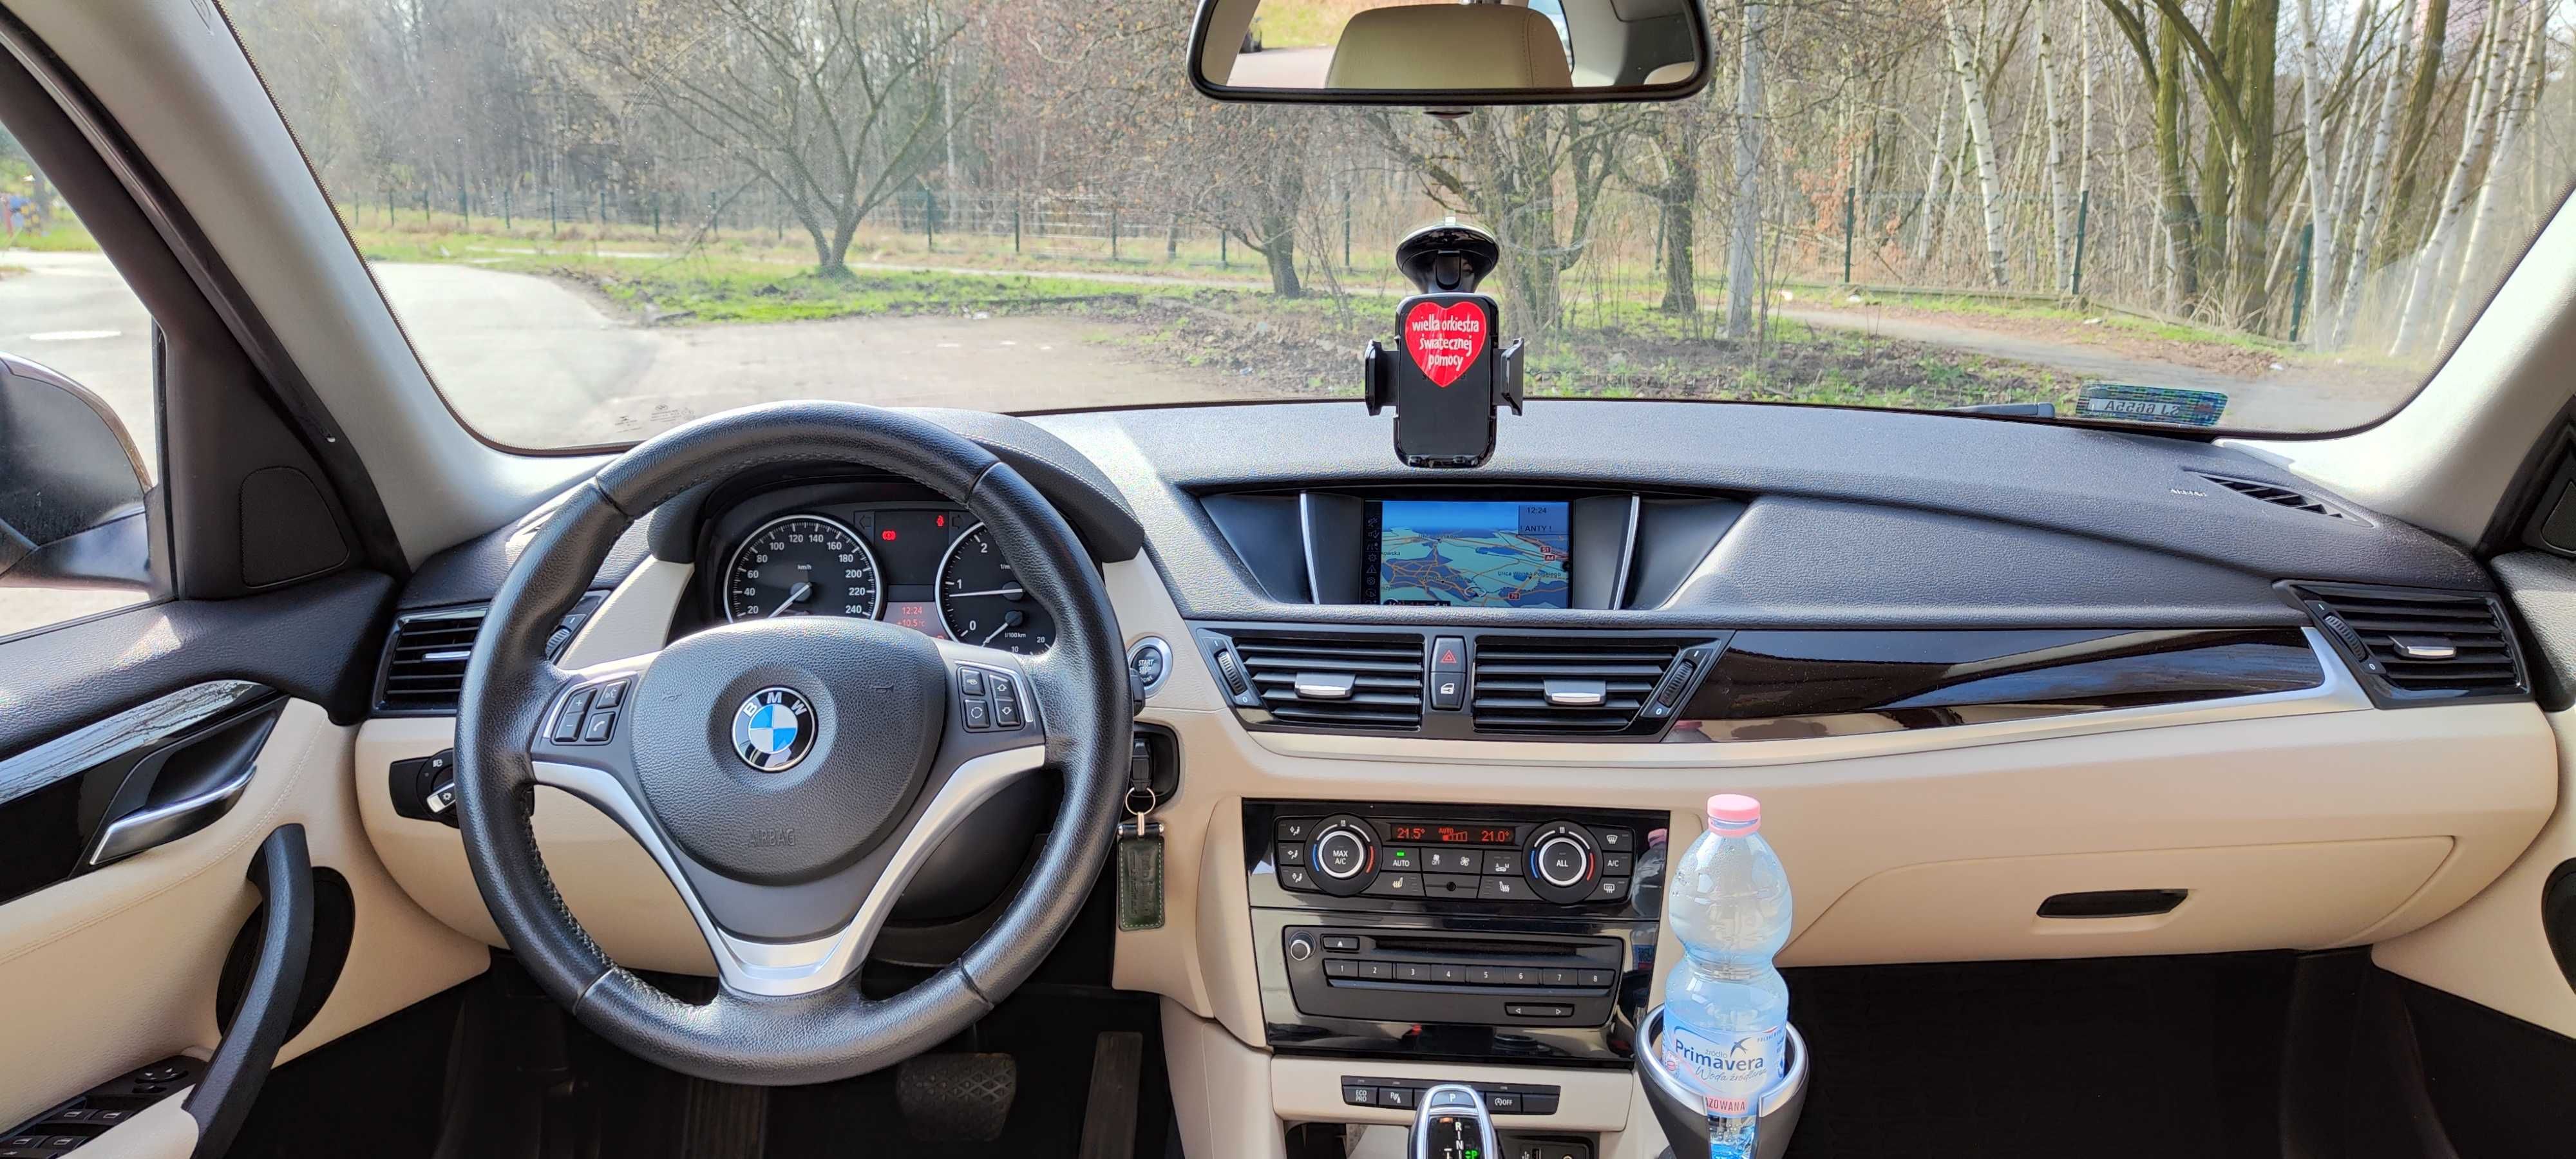 BMW X1 F48 2.0 diesel 143km - 2015r- Przebieg 99 000km kolor Marrakesh